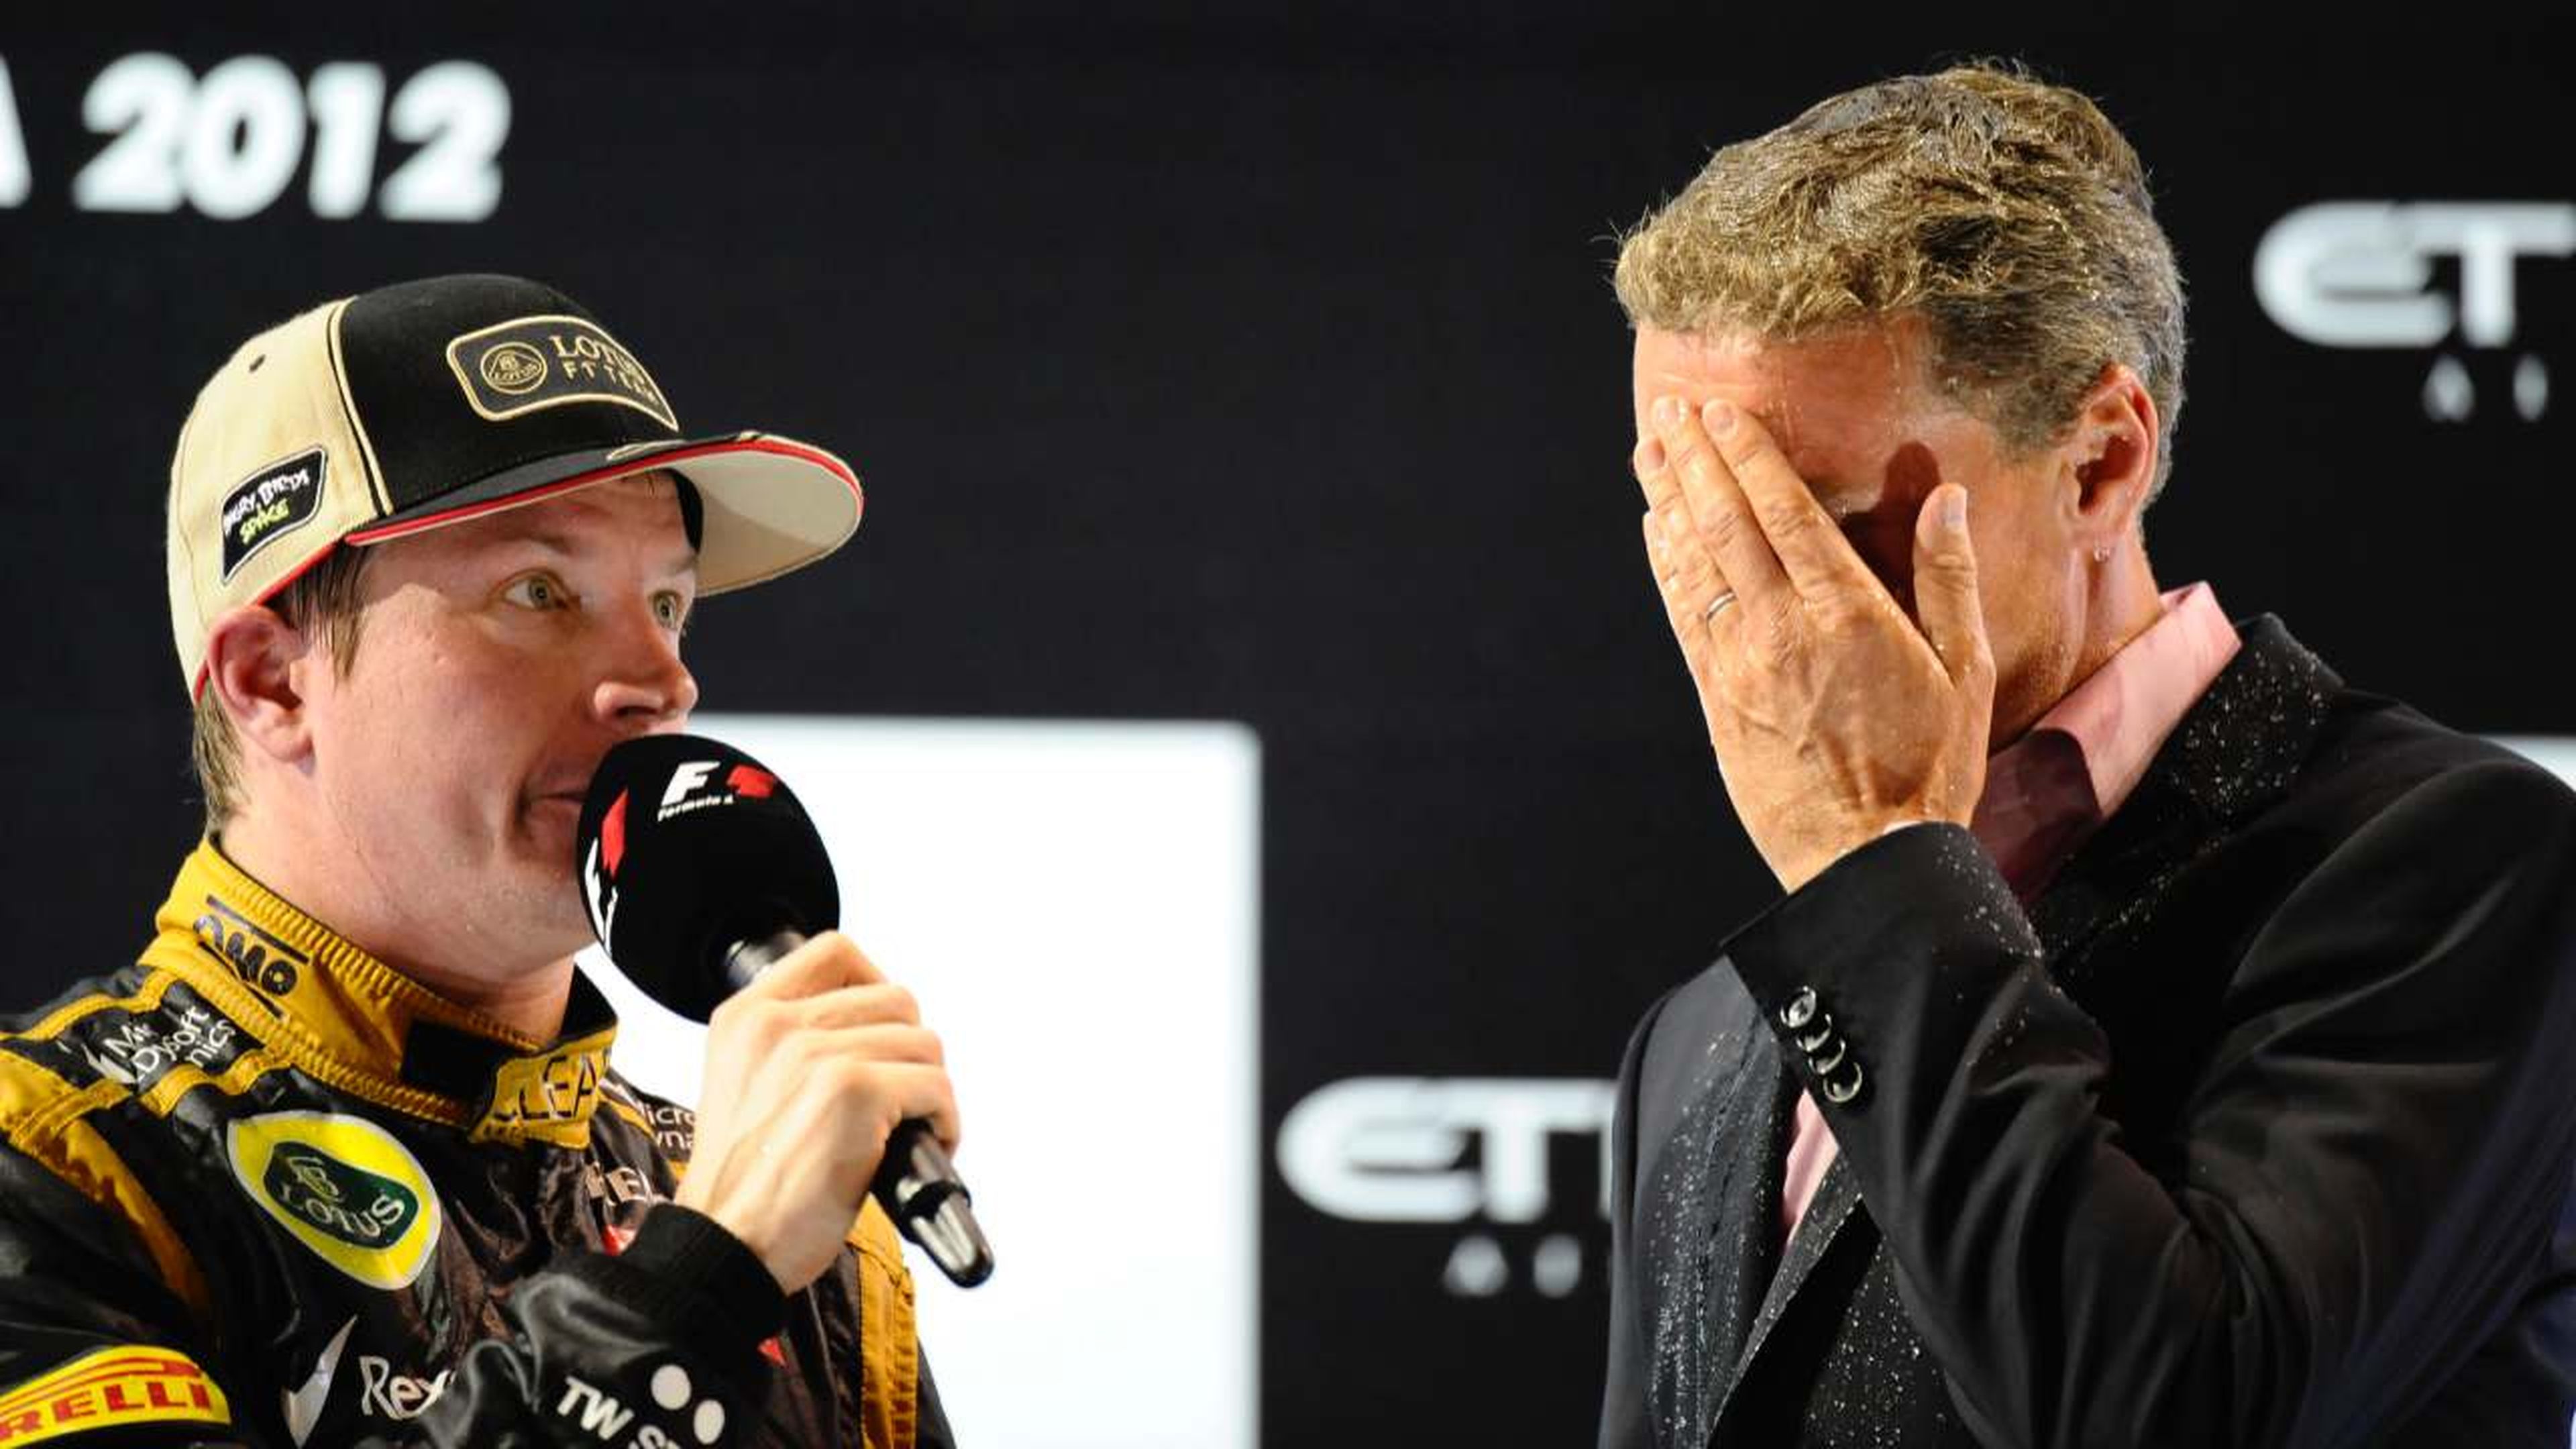 Kimi Räikkönen en el podio de Abu Dhabi